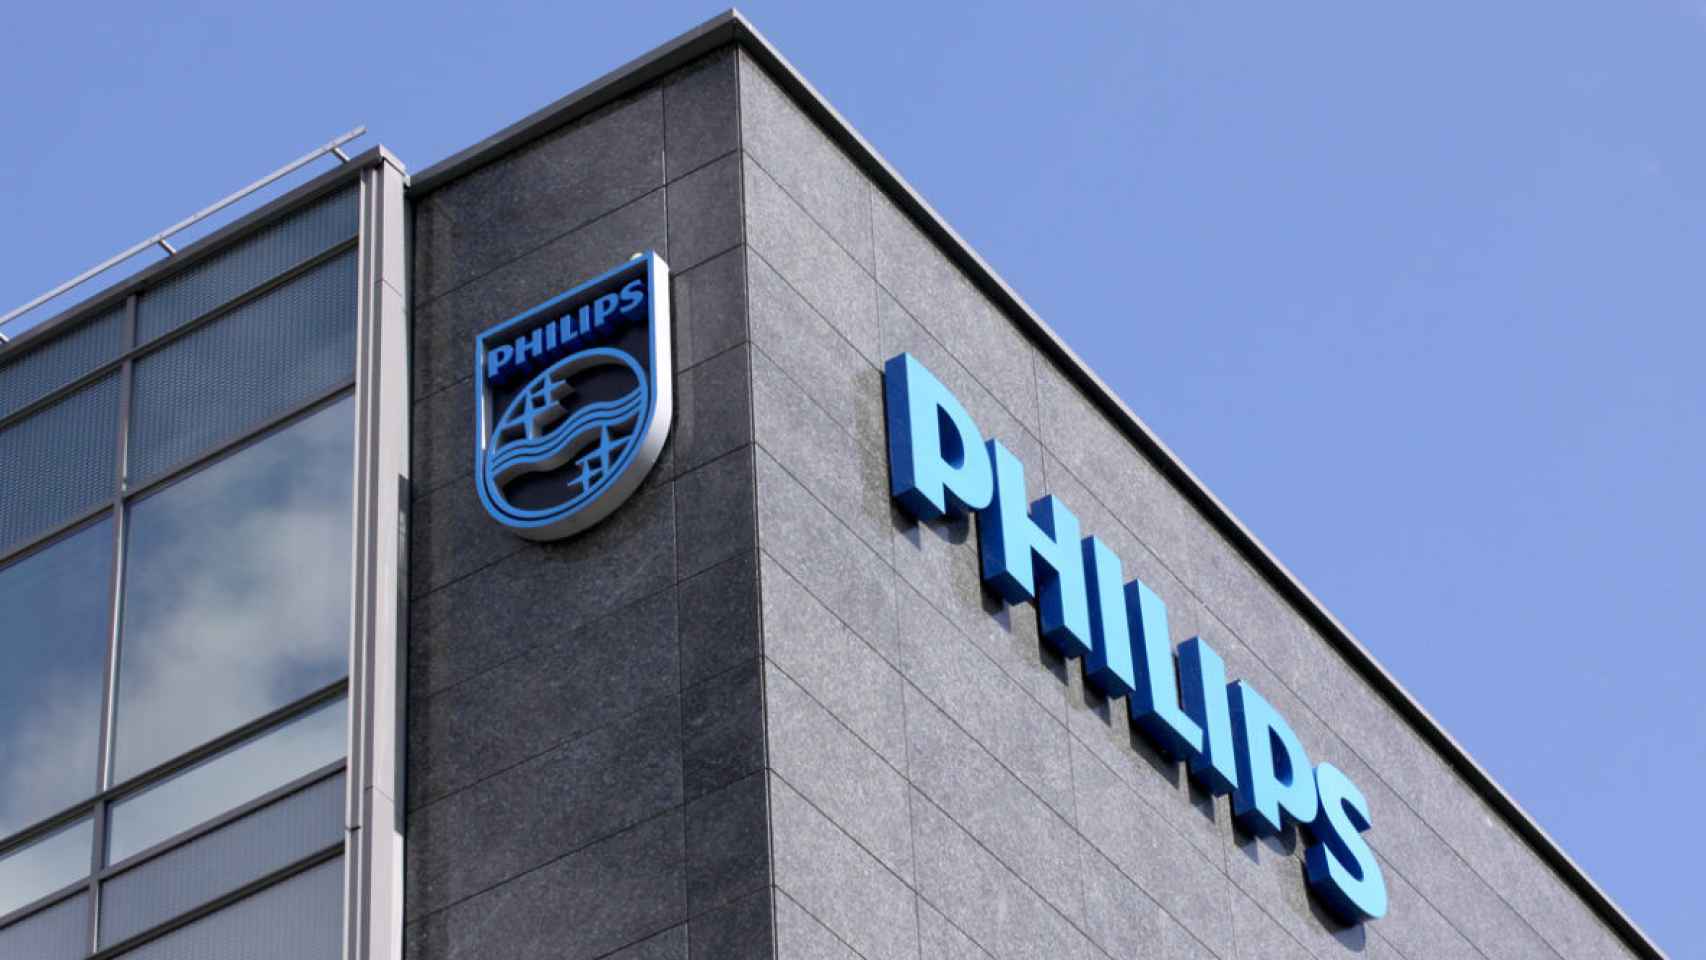 Edificio de Philips